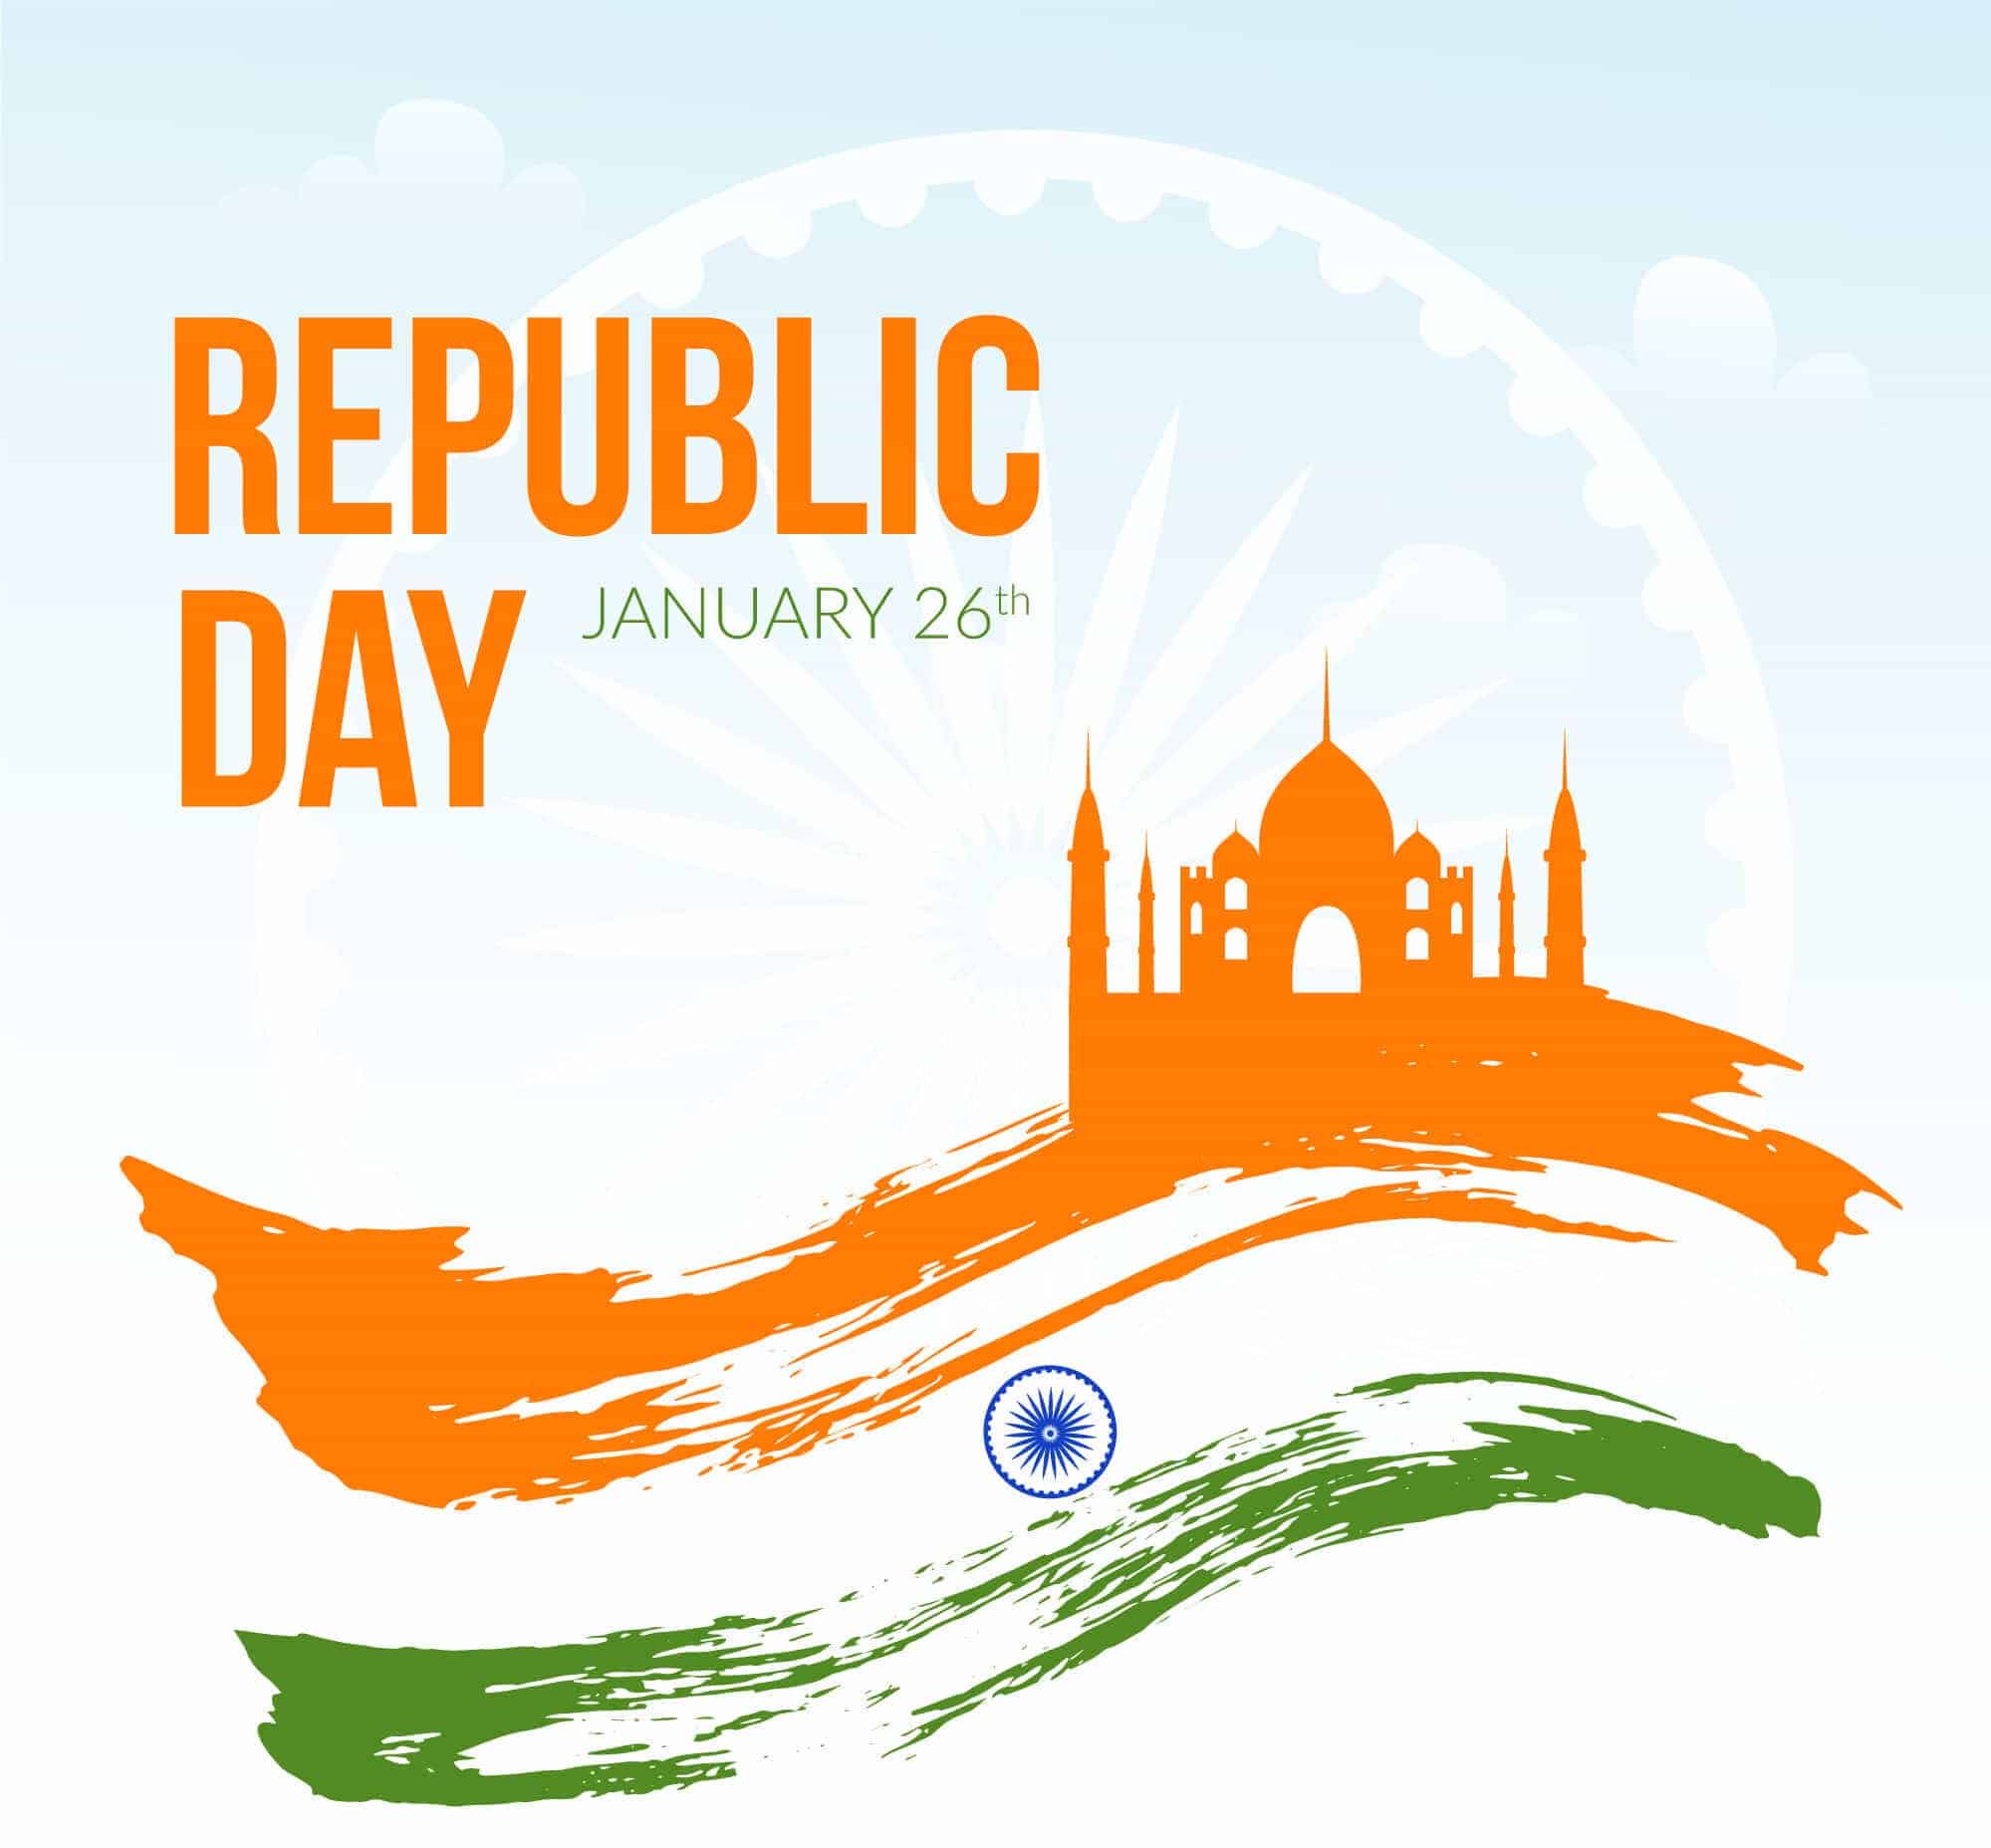 India Republic Day Images